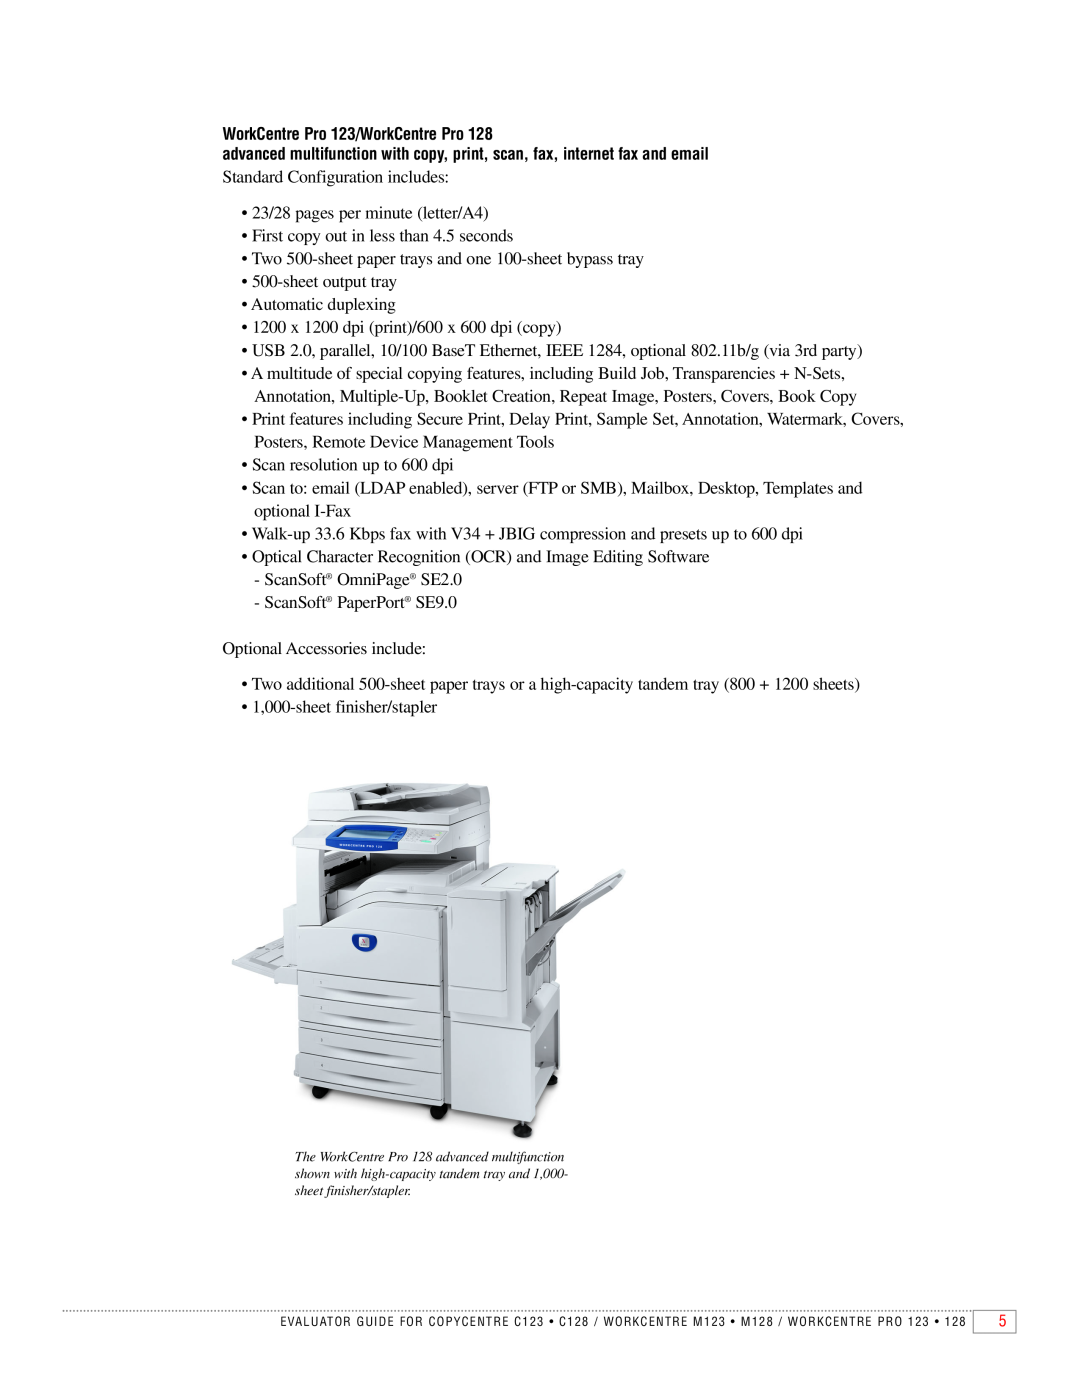 Xerox C128, C123, M123, M128 manual WorkCentre Pro 123/WorkCentre Pro 